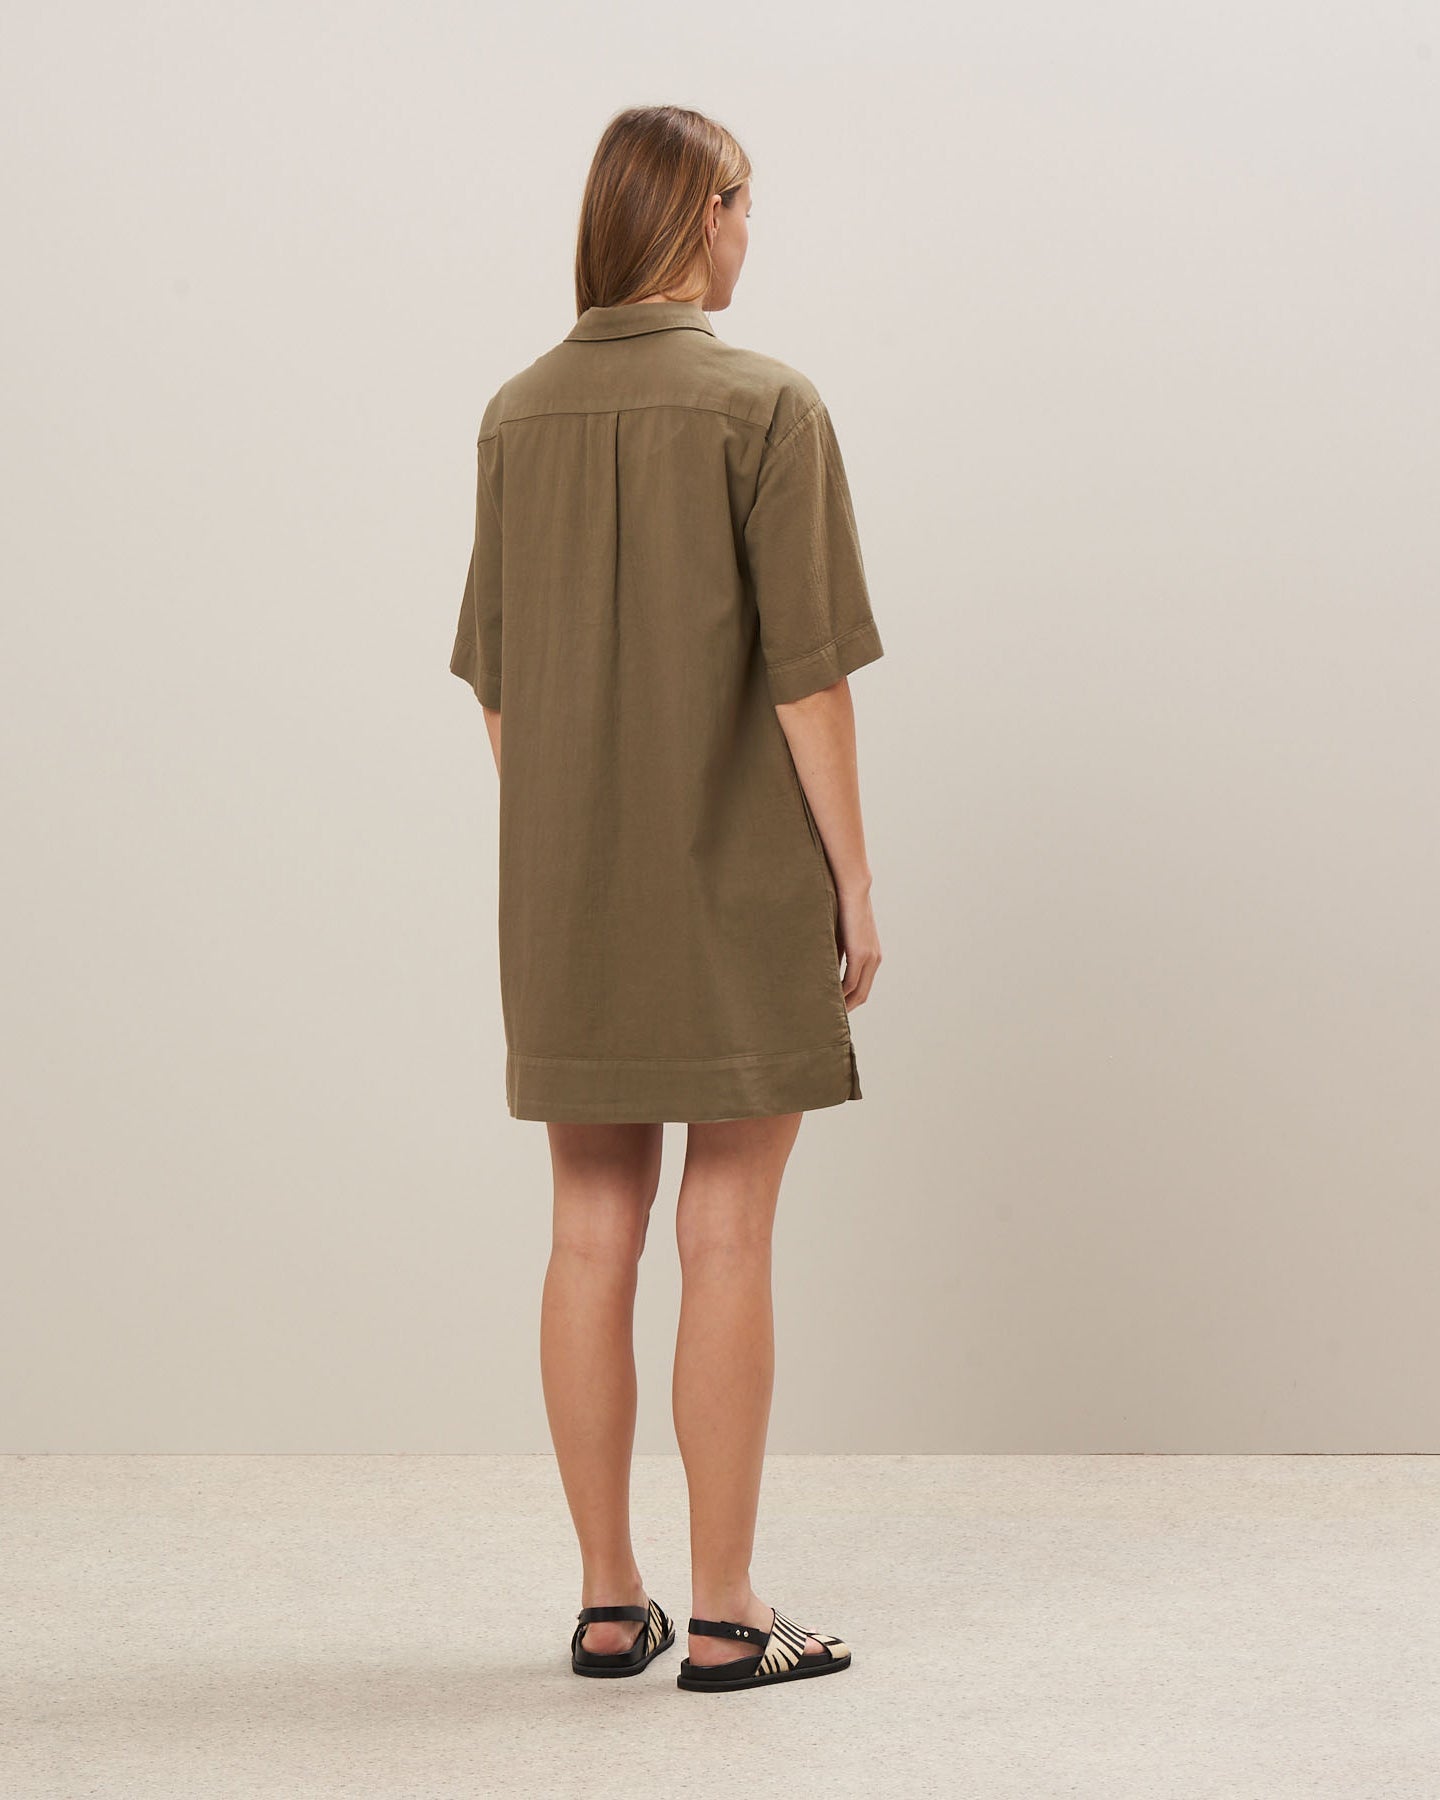 Robe Femme en coton Vert militaire Roster BBRN604-35